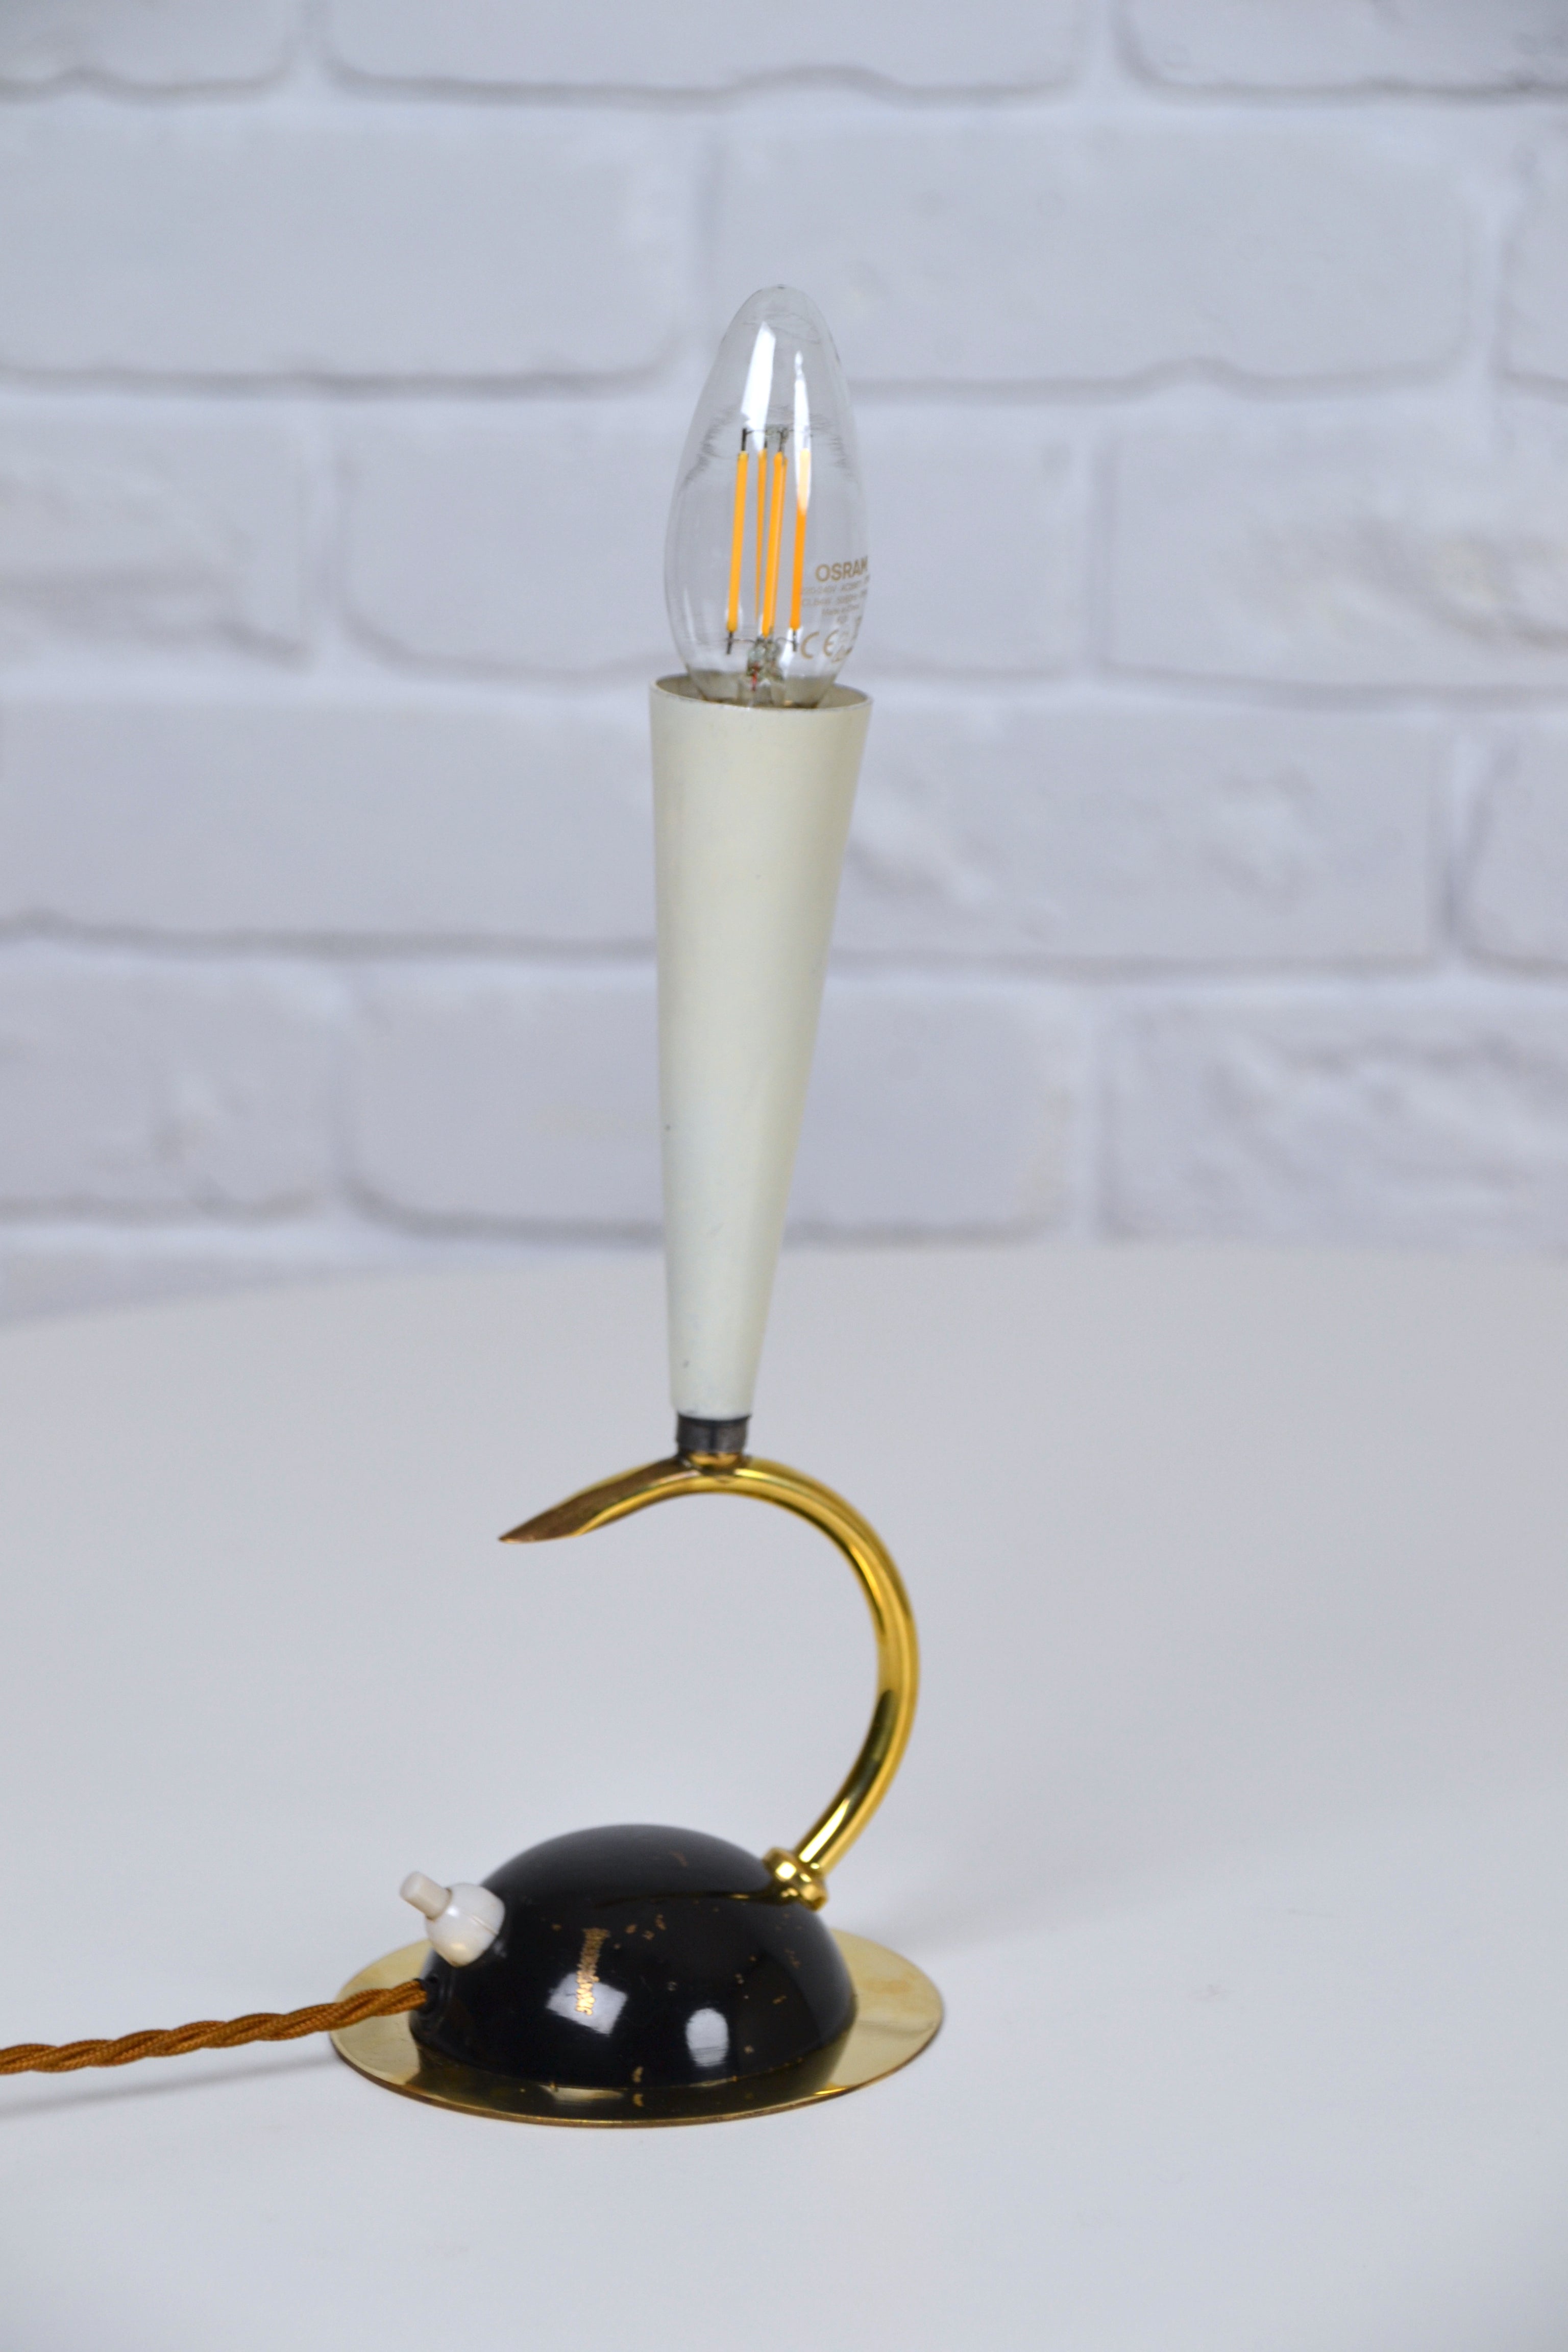 *Rare stunning Italian Mid century candle table lamp / abstract design